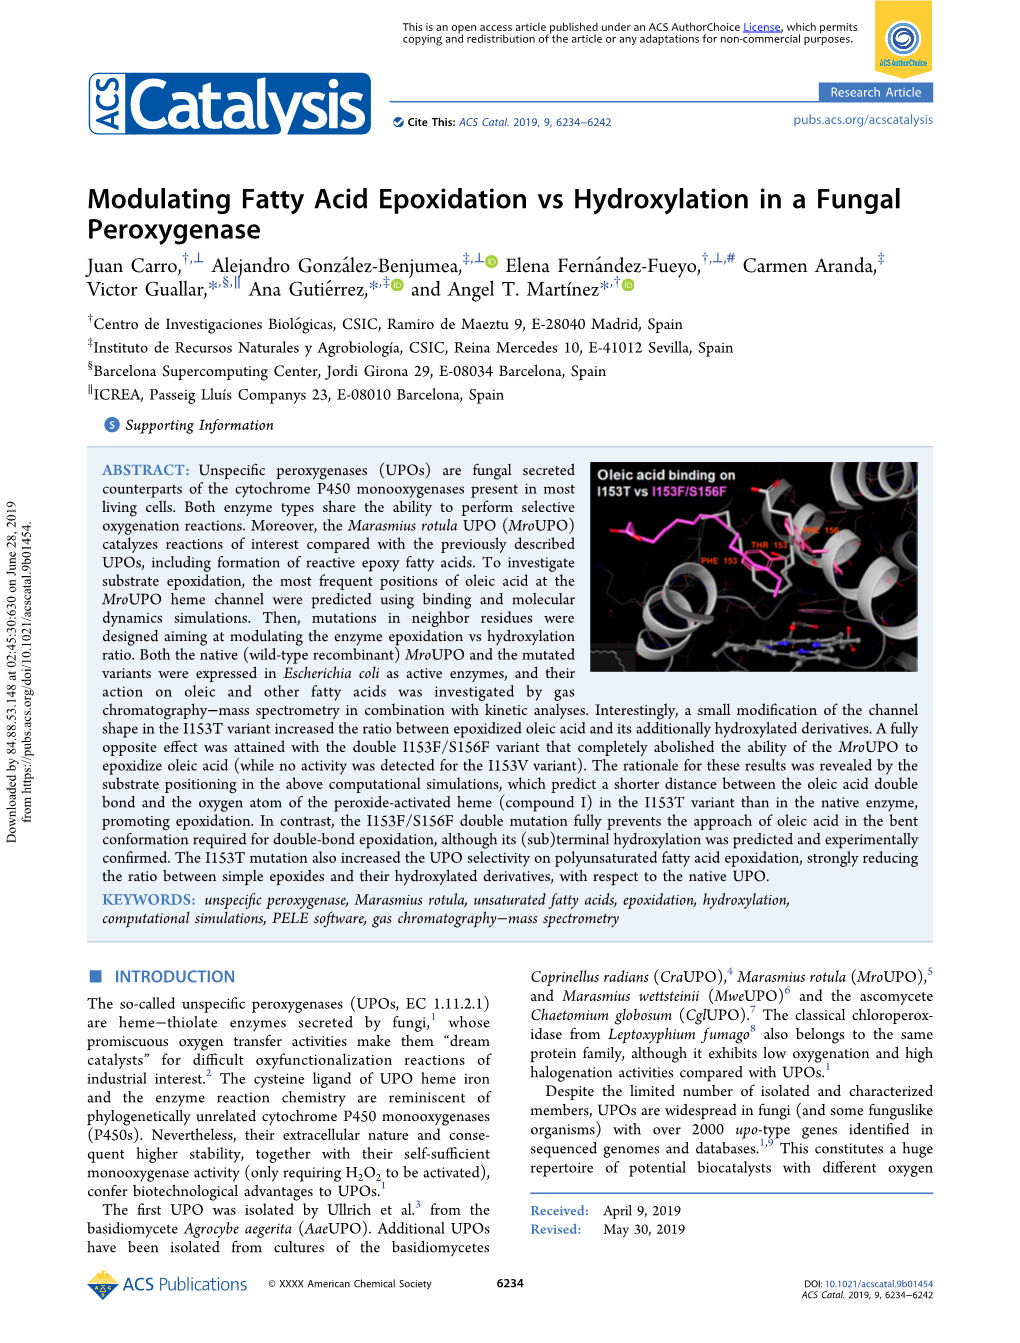 Modulating Fatty Acid Epoxidation Vs Hydroxylation in a Fungal